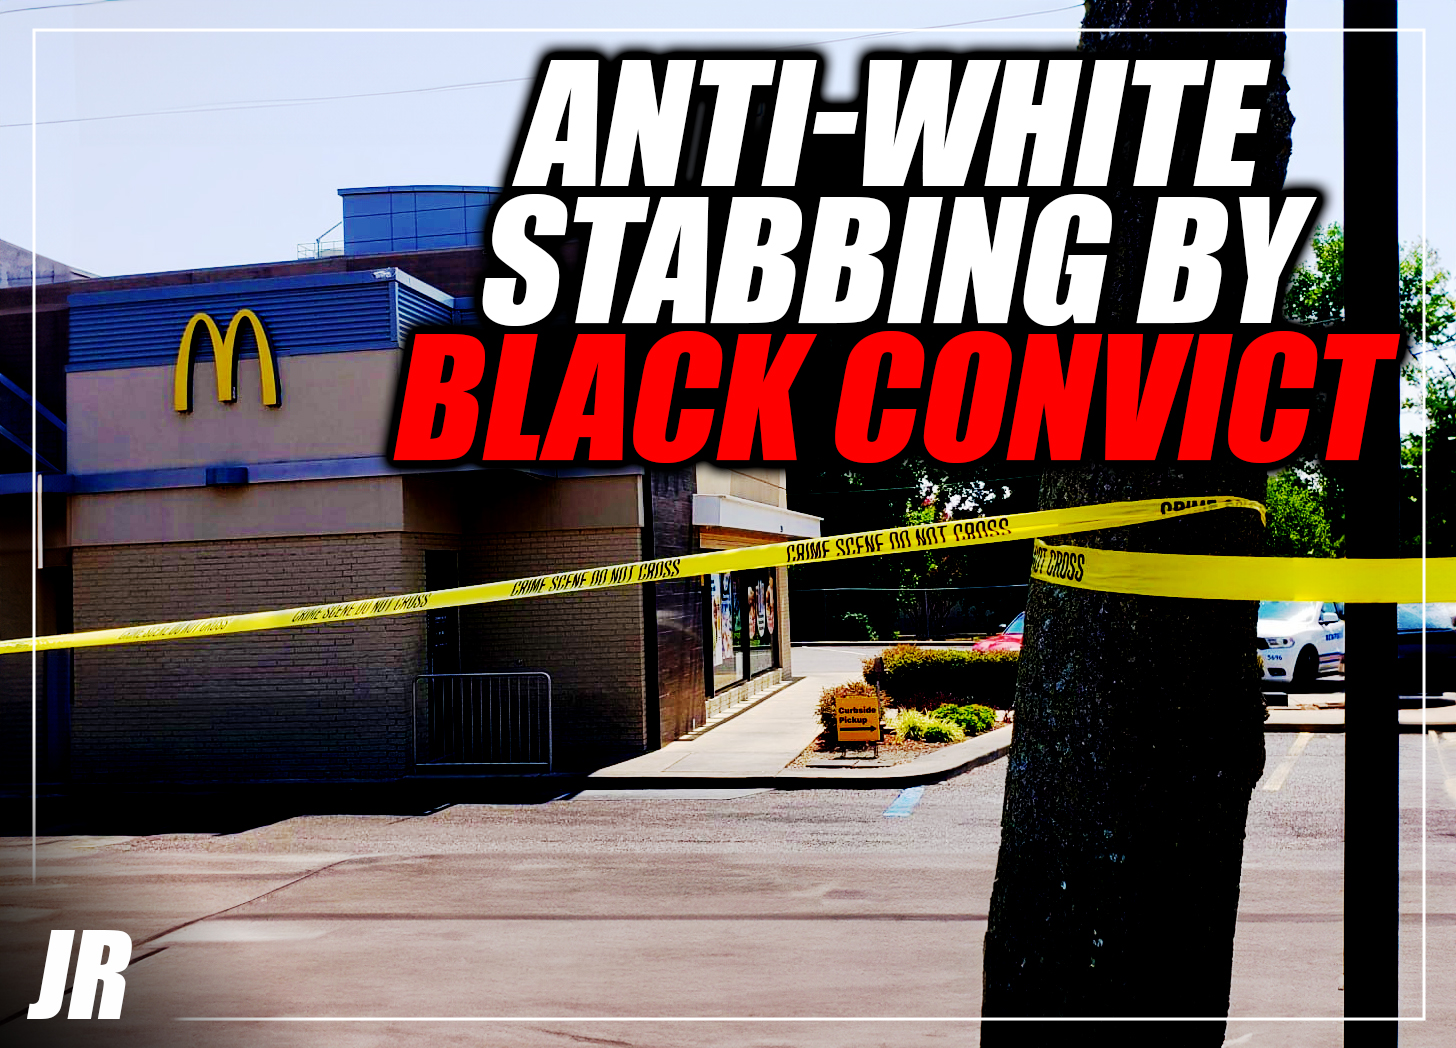 Police Arrest Black Ex-convict for ‘anti-White’ stabbing near White House